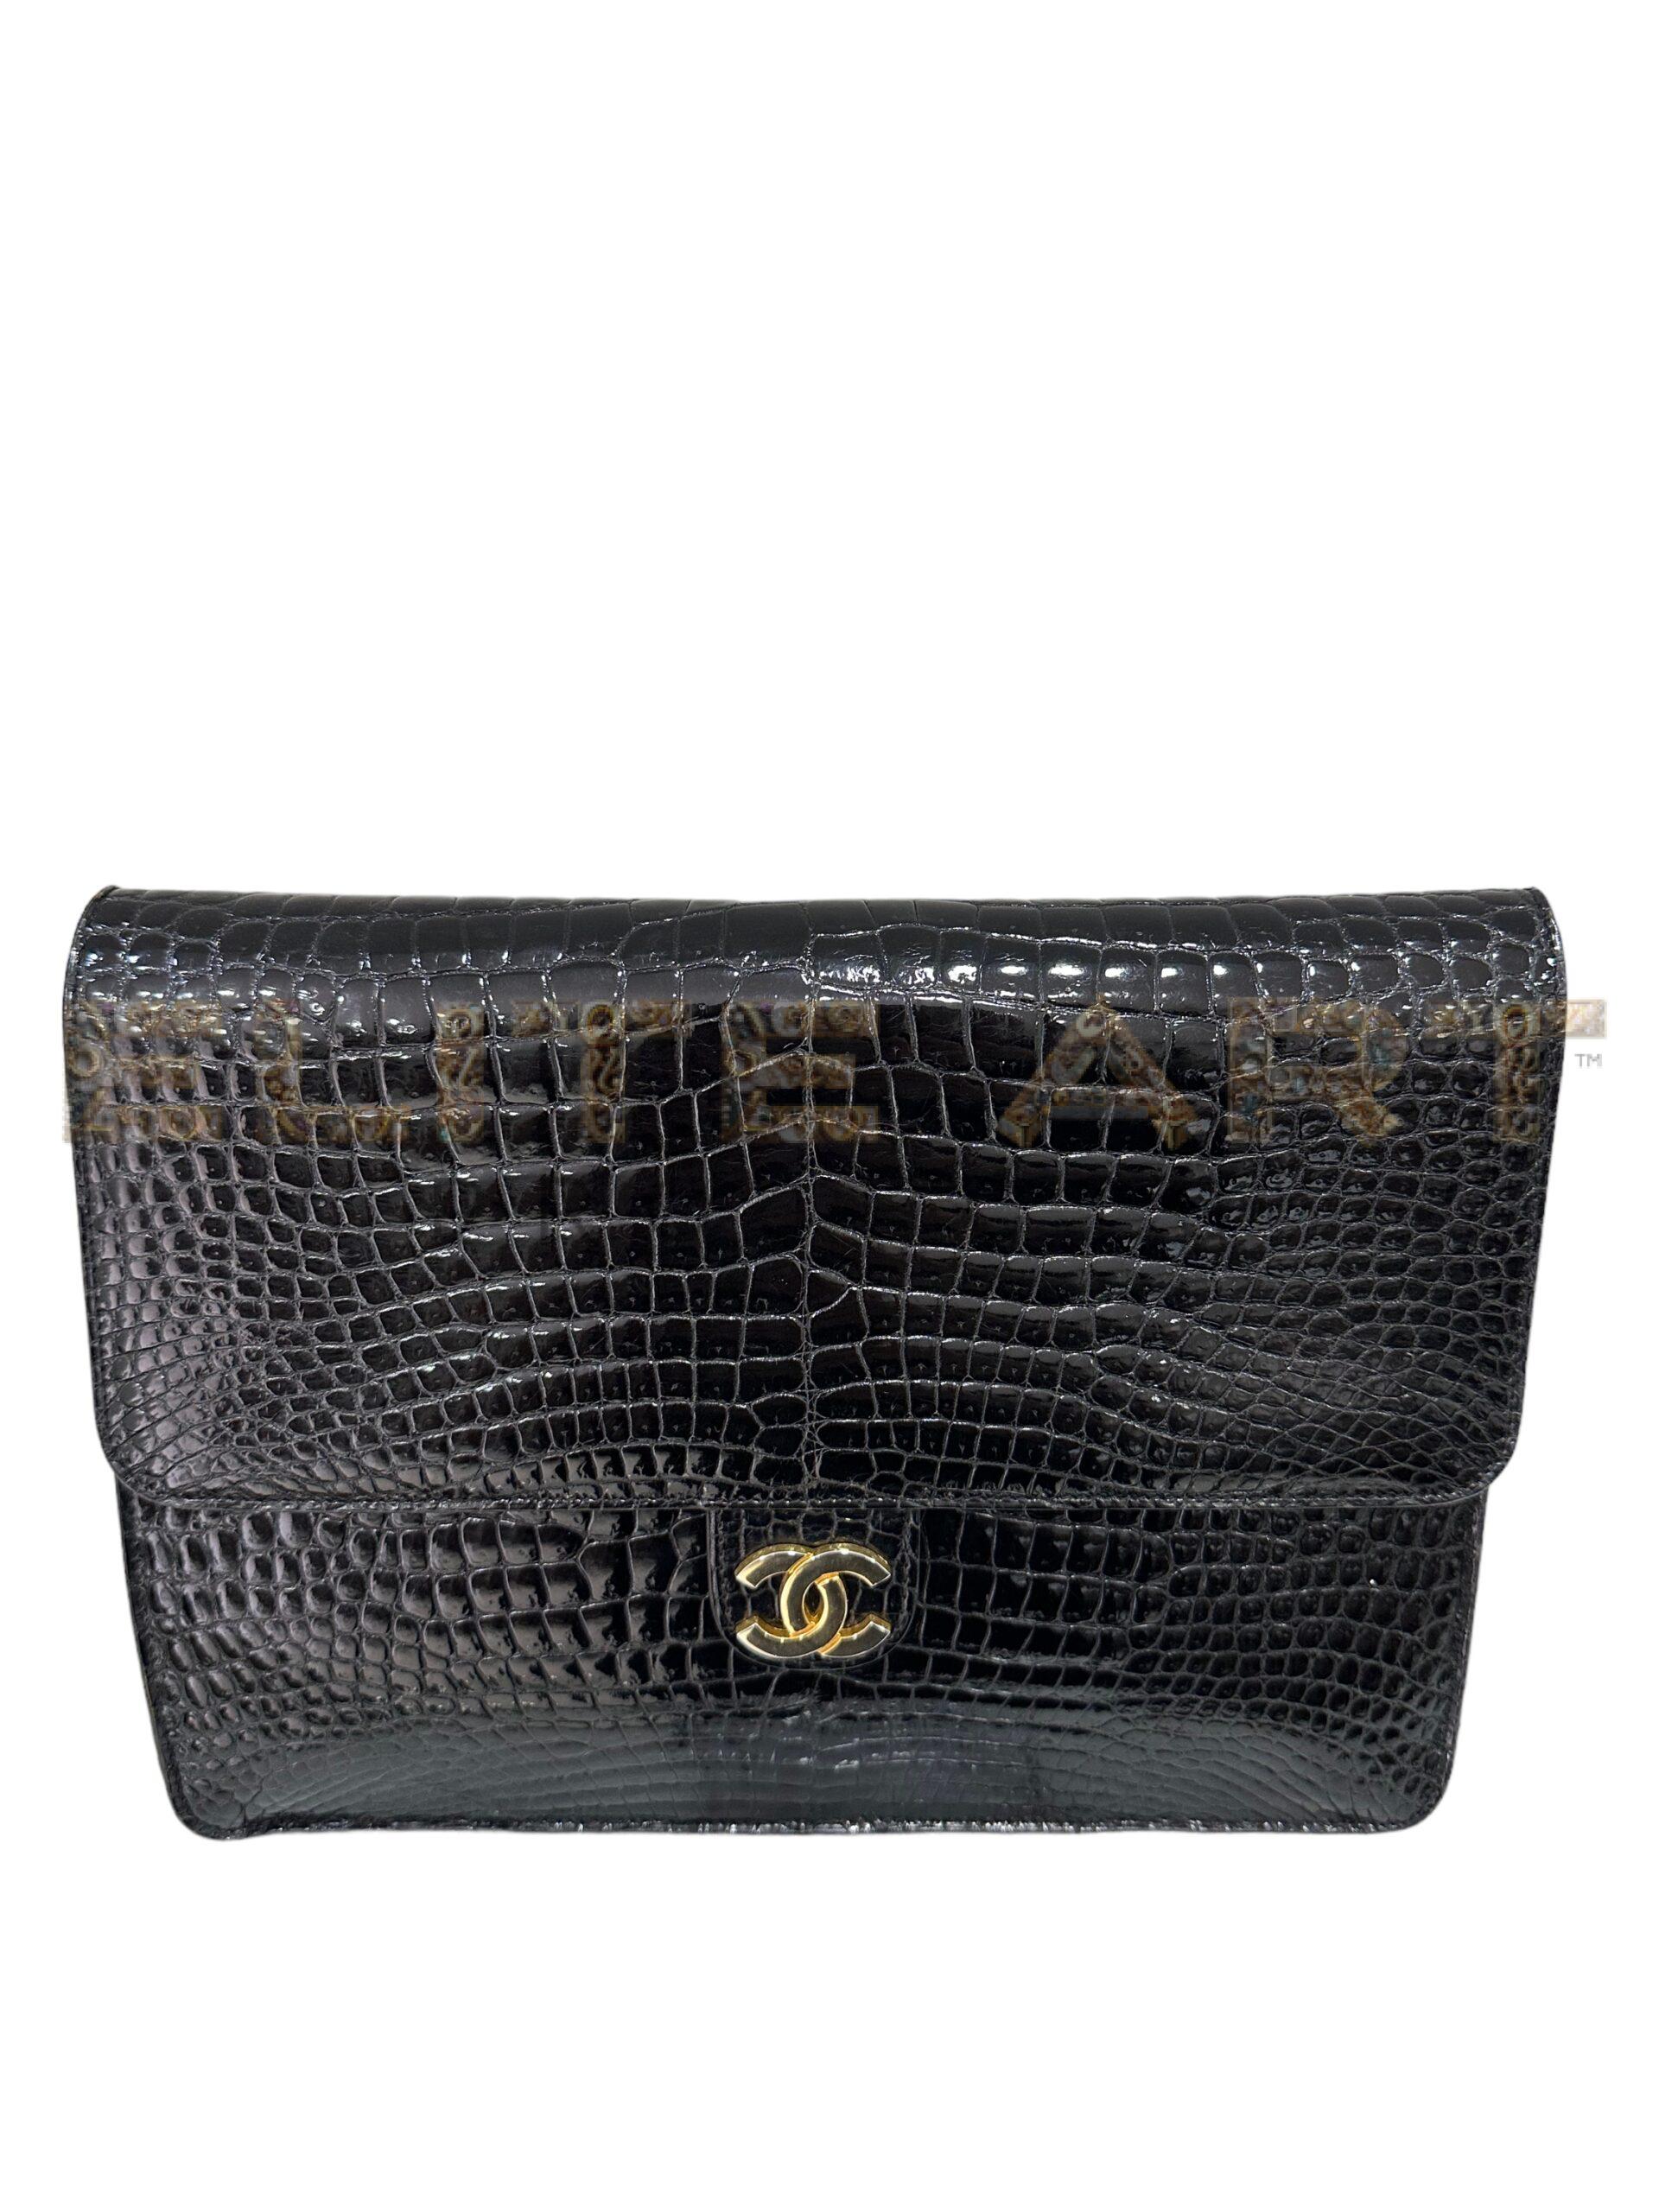 Timeless bag, black coco leather, golden inserts, elegance